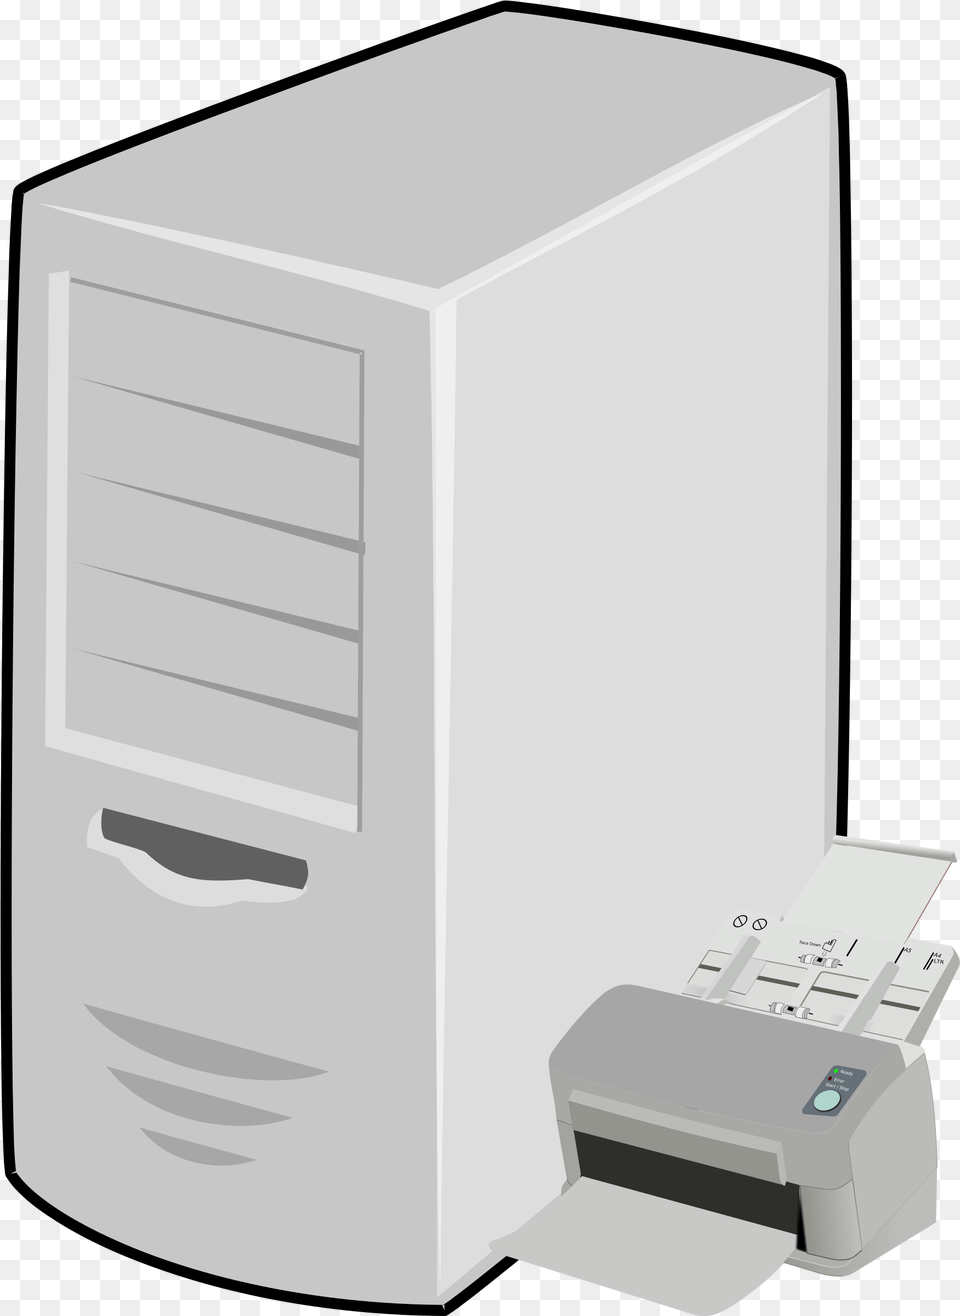 Fax Server Clip Arts Fax Server, Computer Hardware, Electronics, Hardware, Machine Png Image